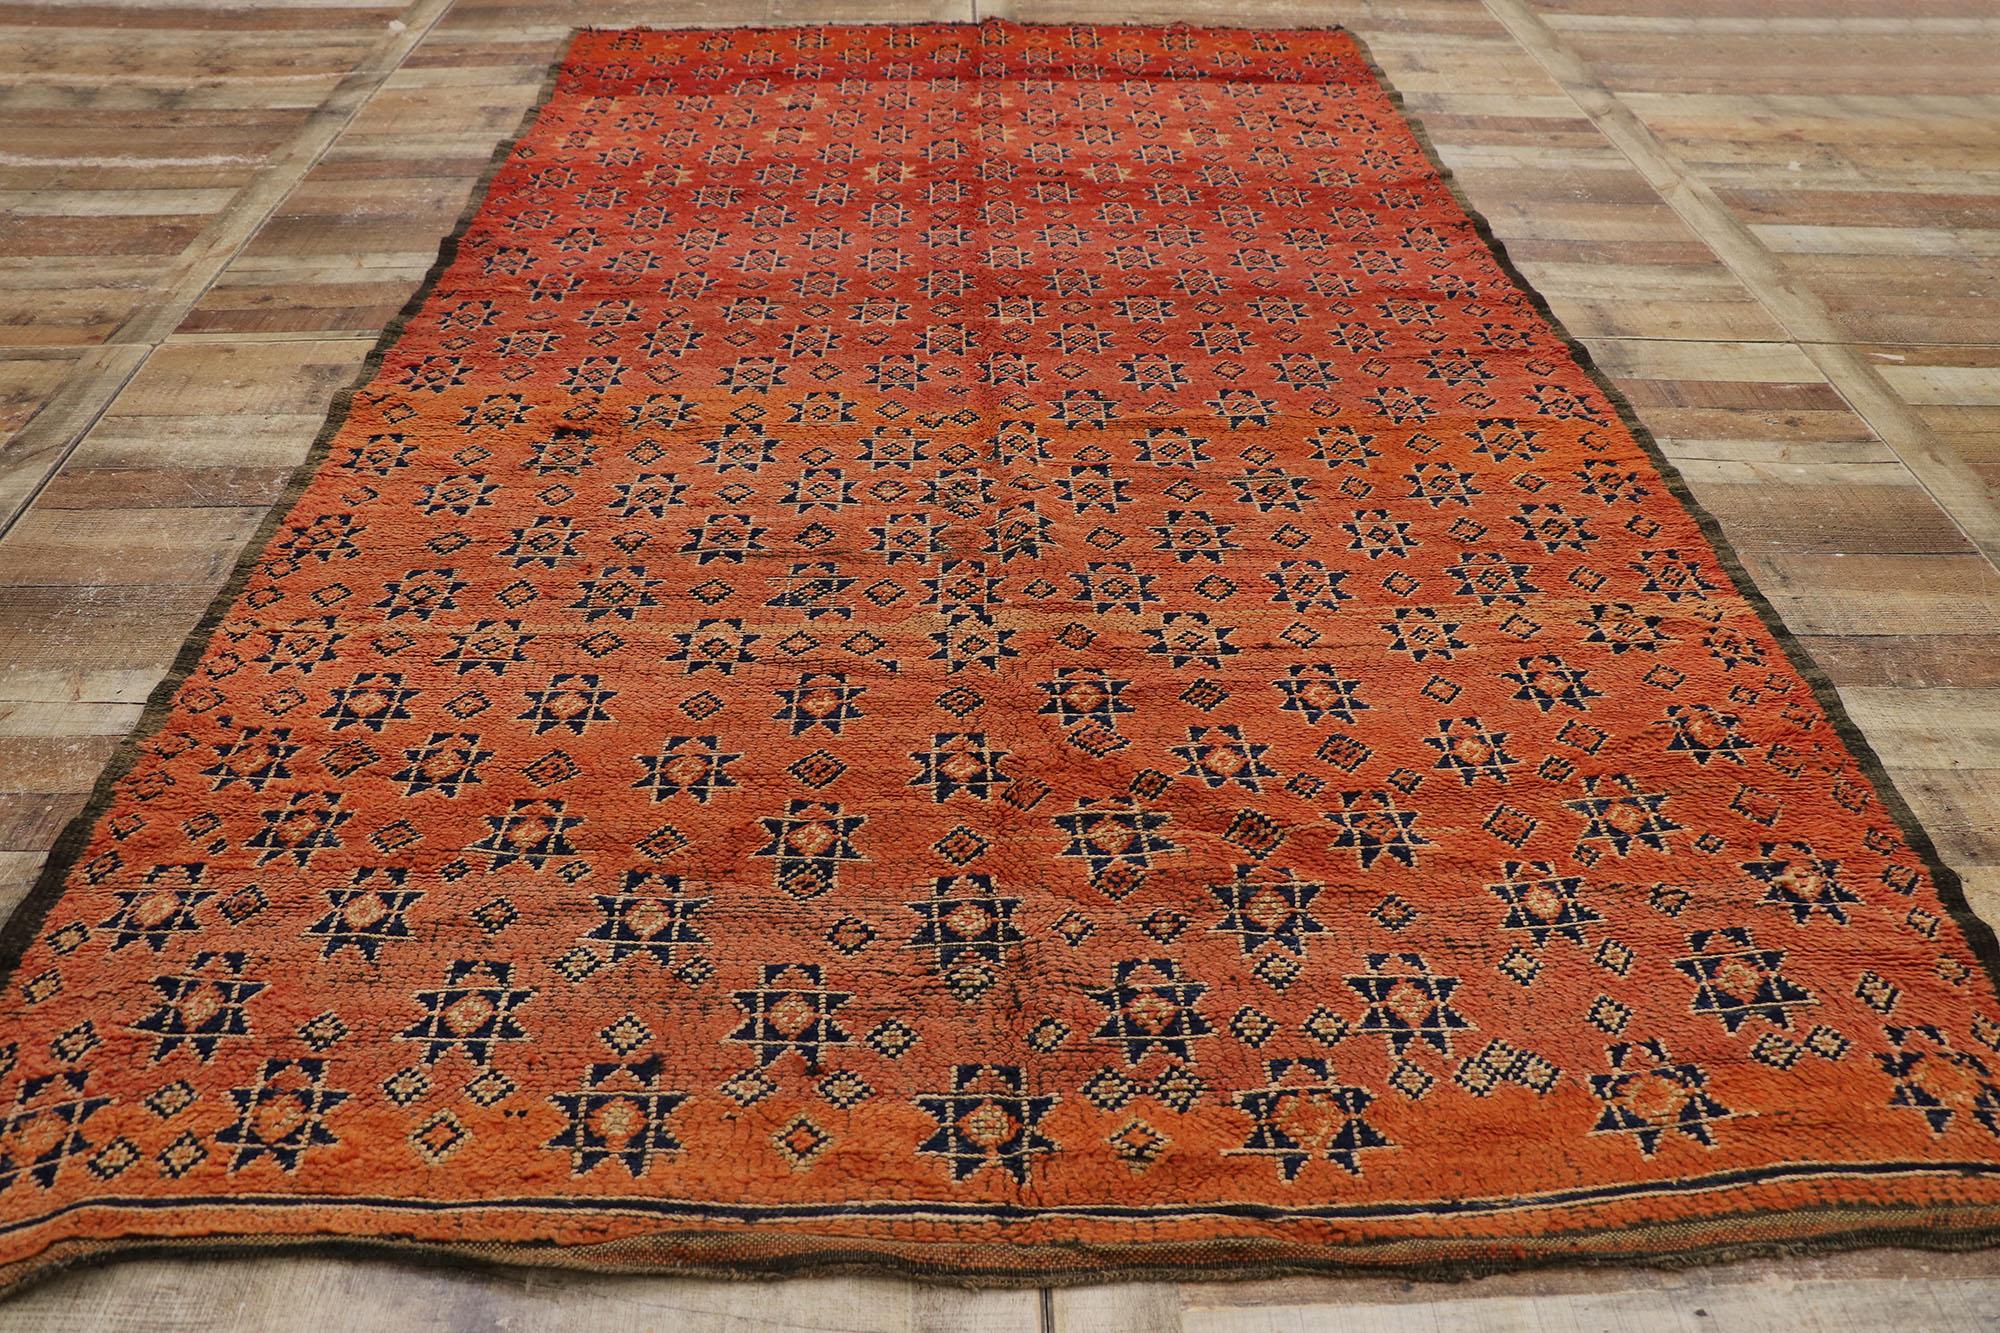 Vintage Beni MGuild Moroccan Rug, Midcentury Modern Meets Tribal Enchantment For Sale 1